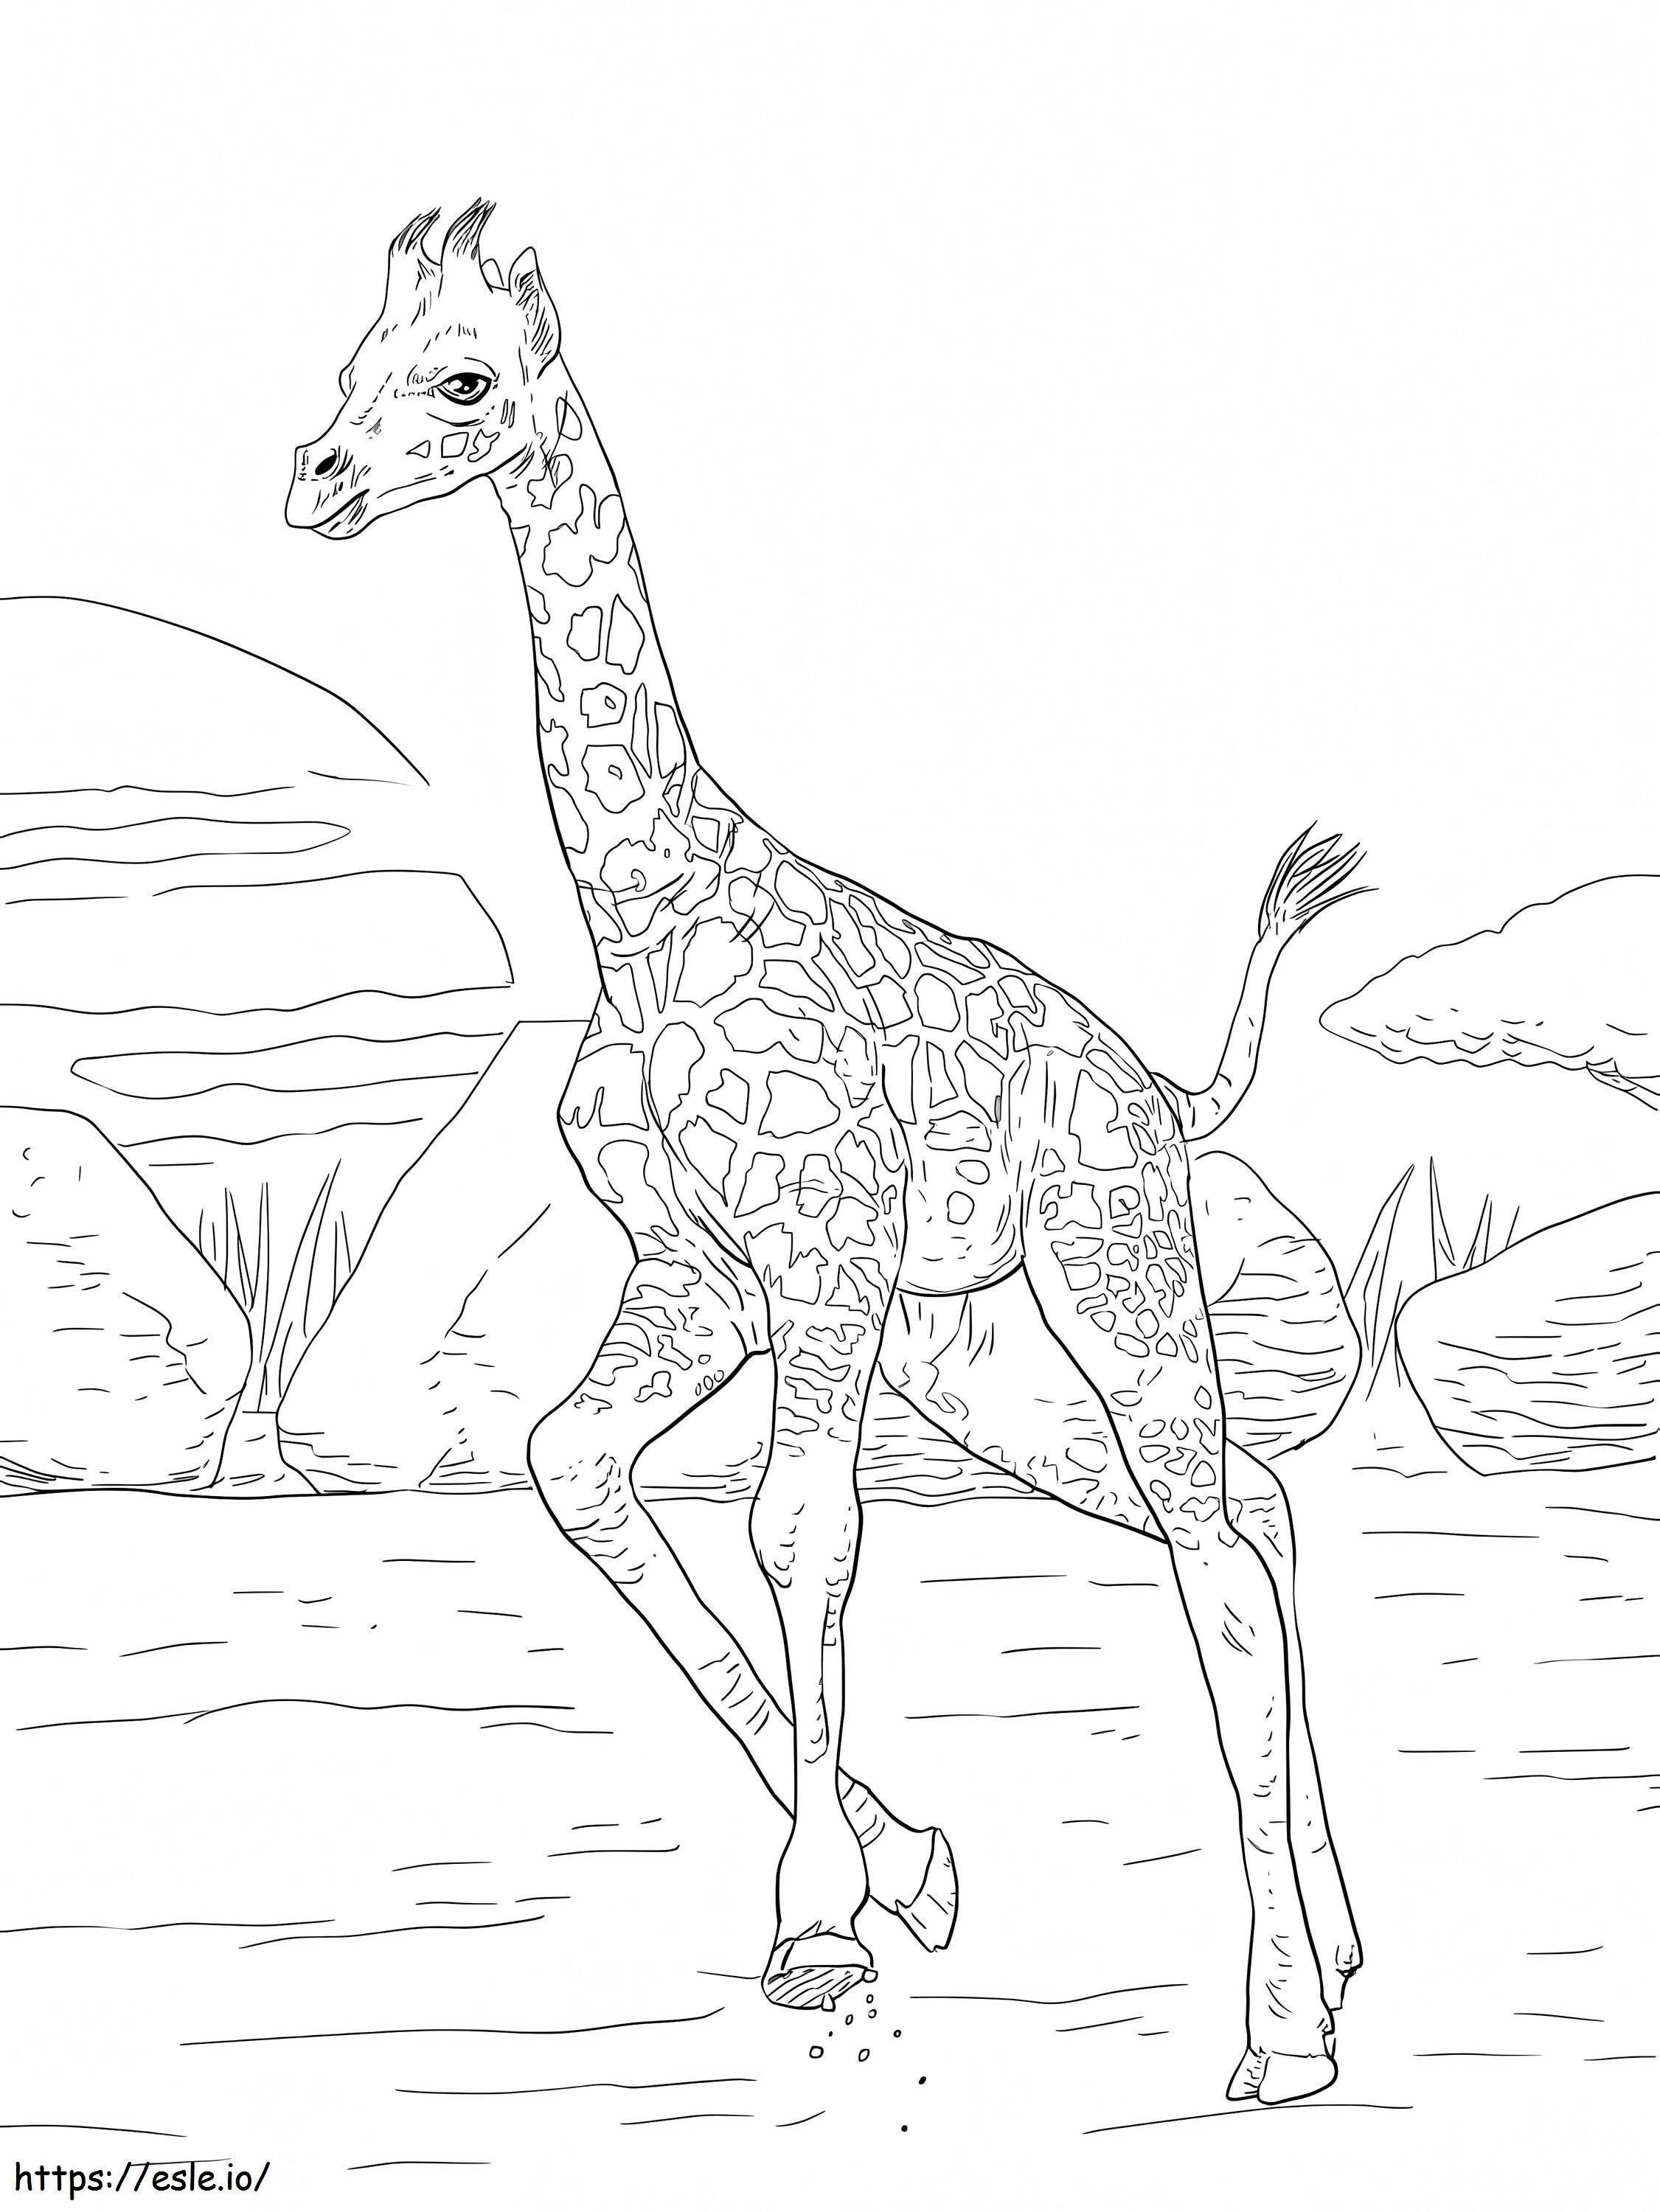 Giraffe ausdrucken ausmalbilder